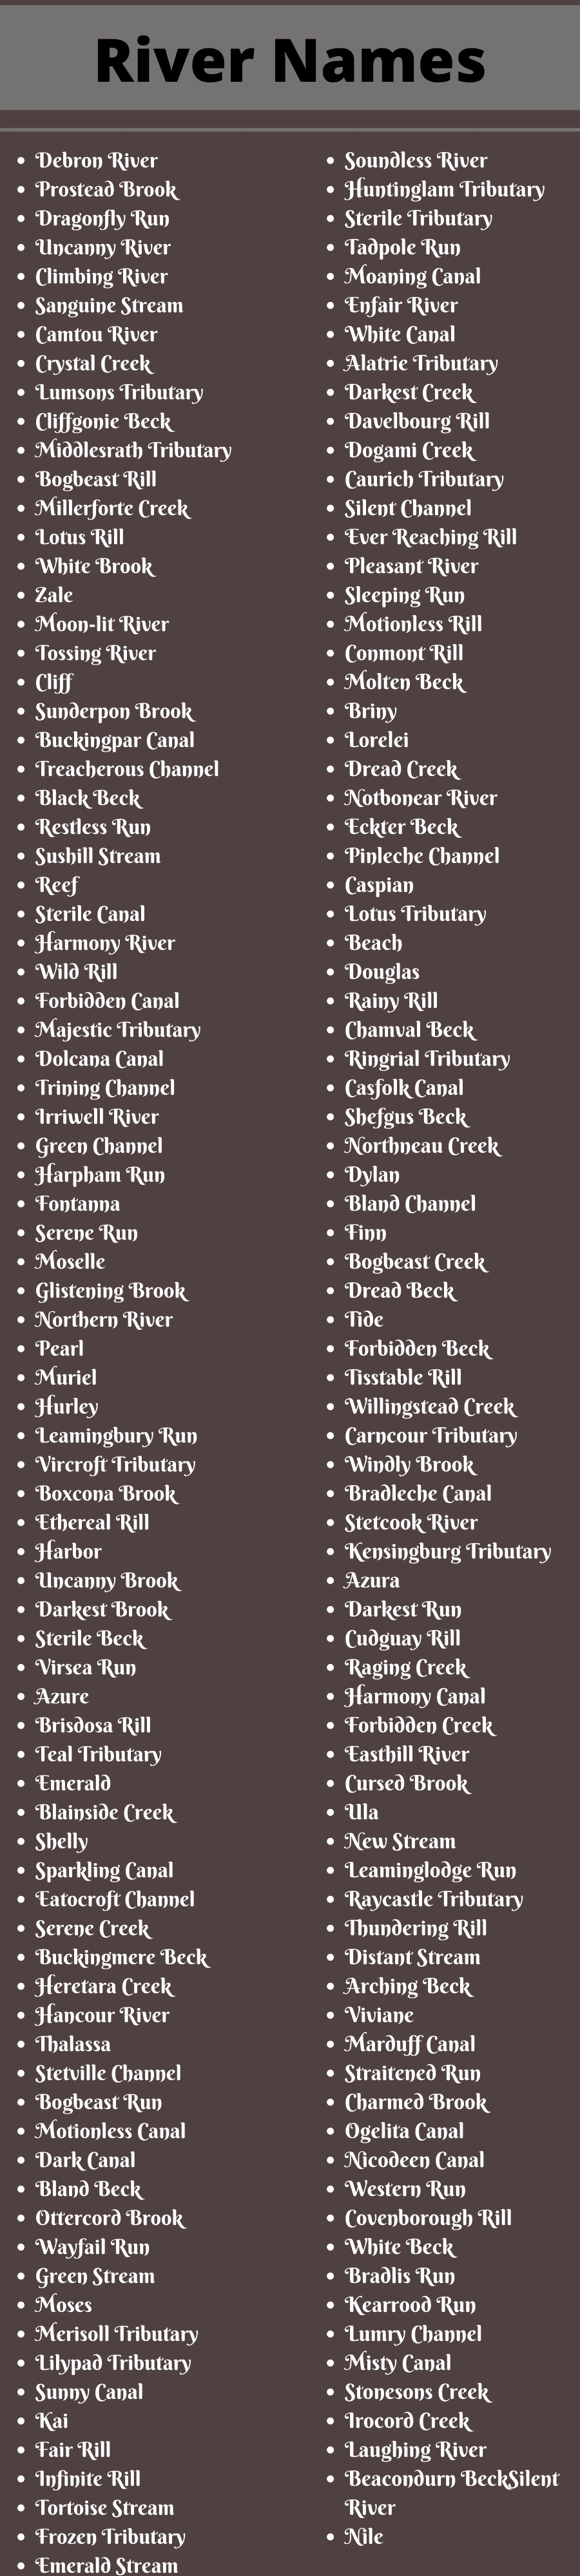 River Names